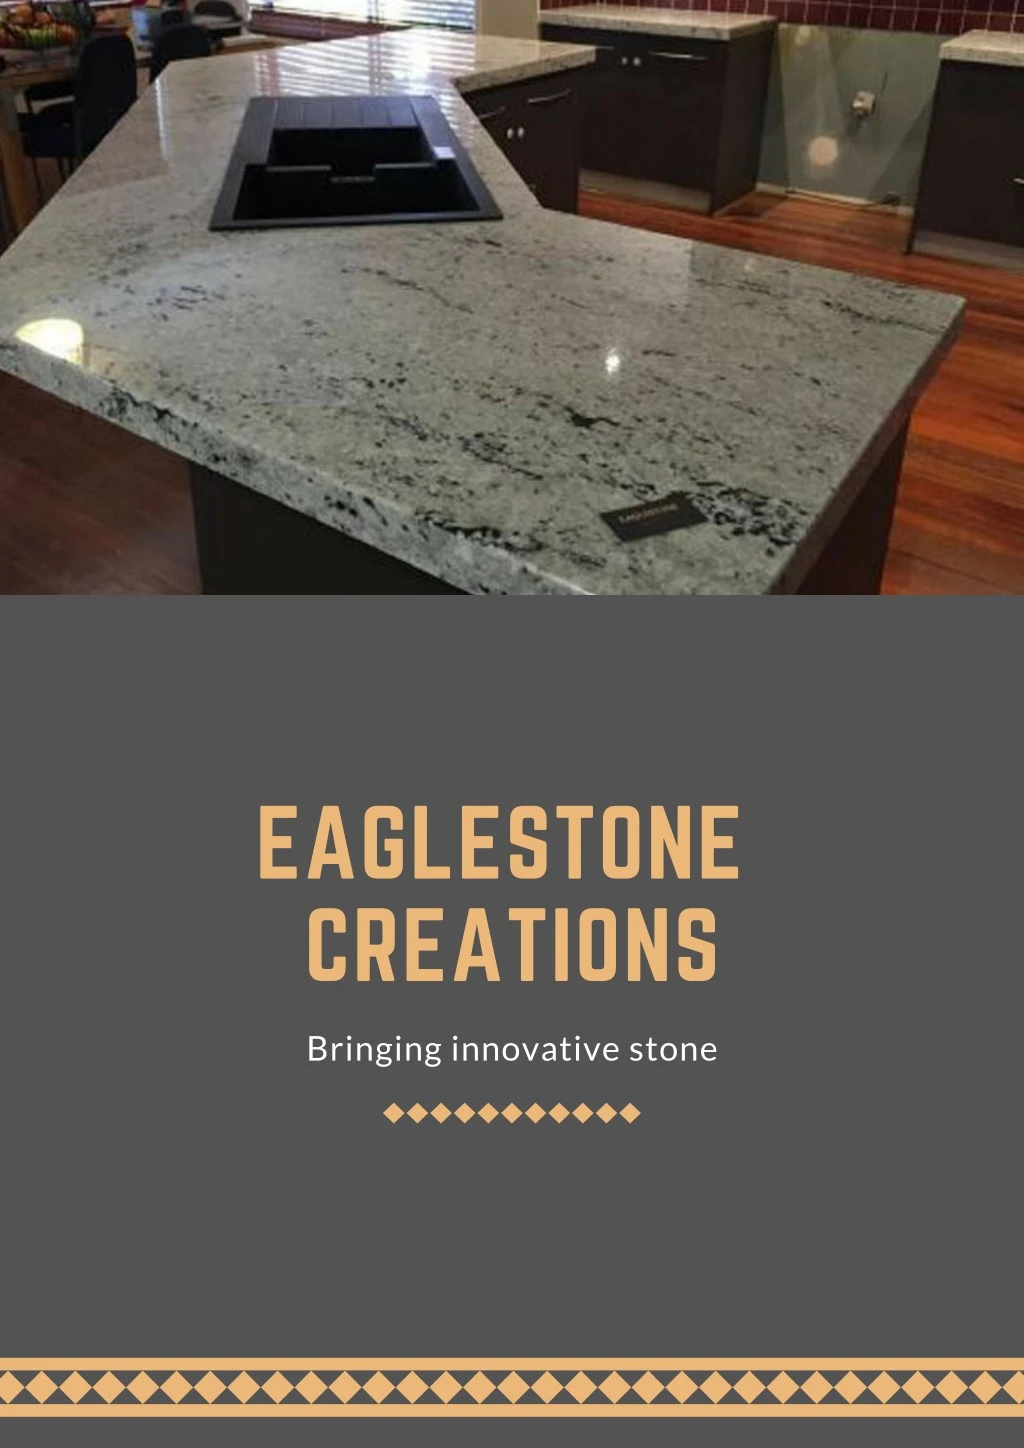 eaglestone creations